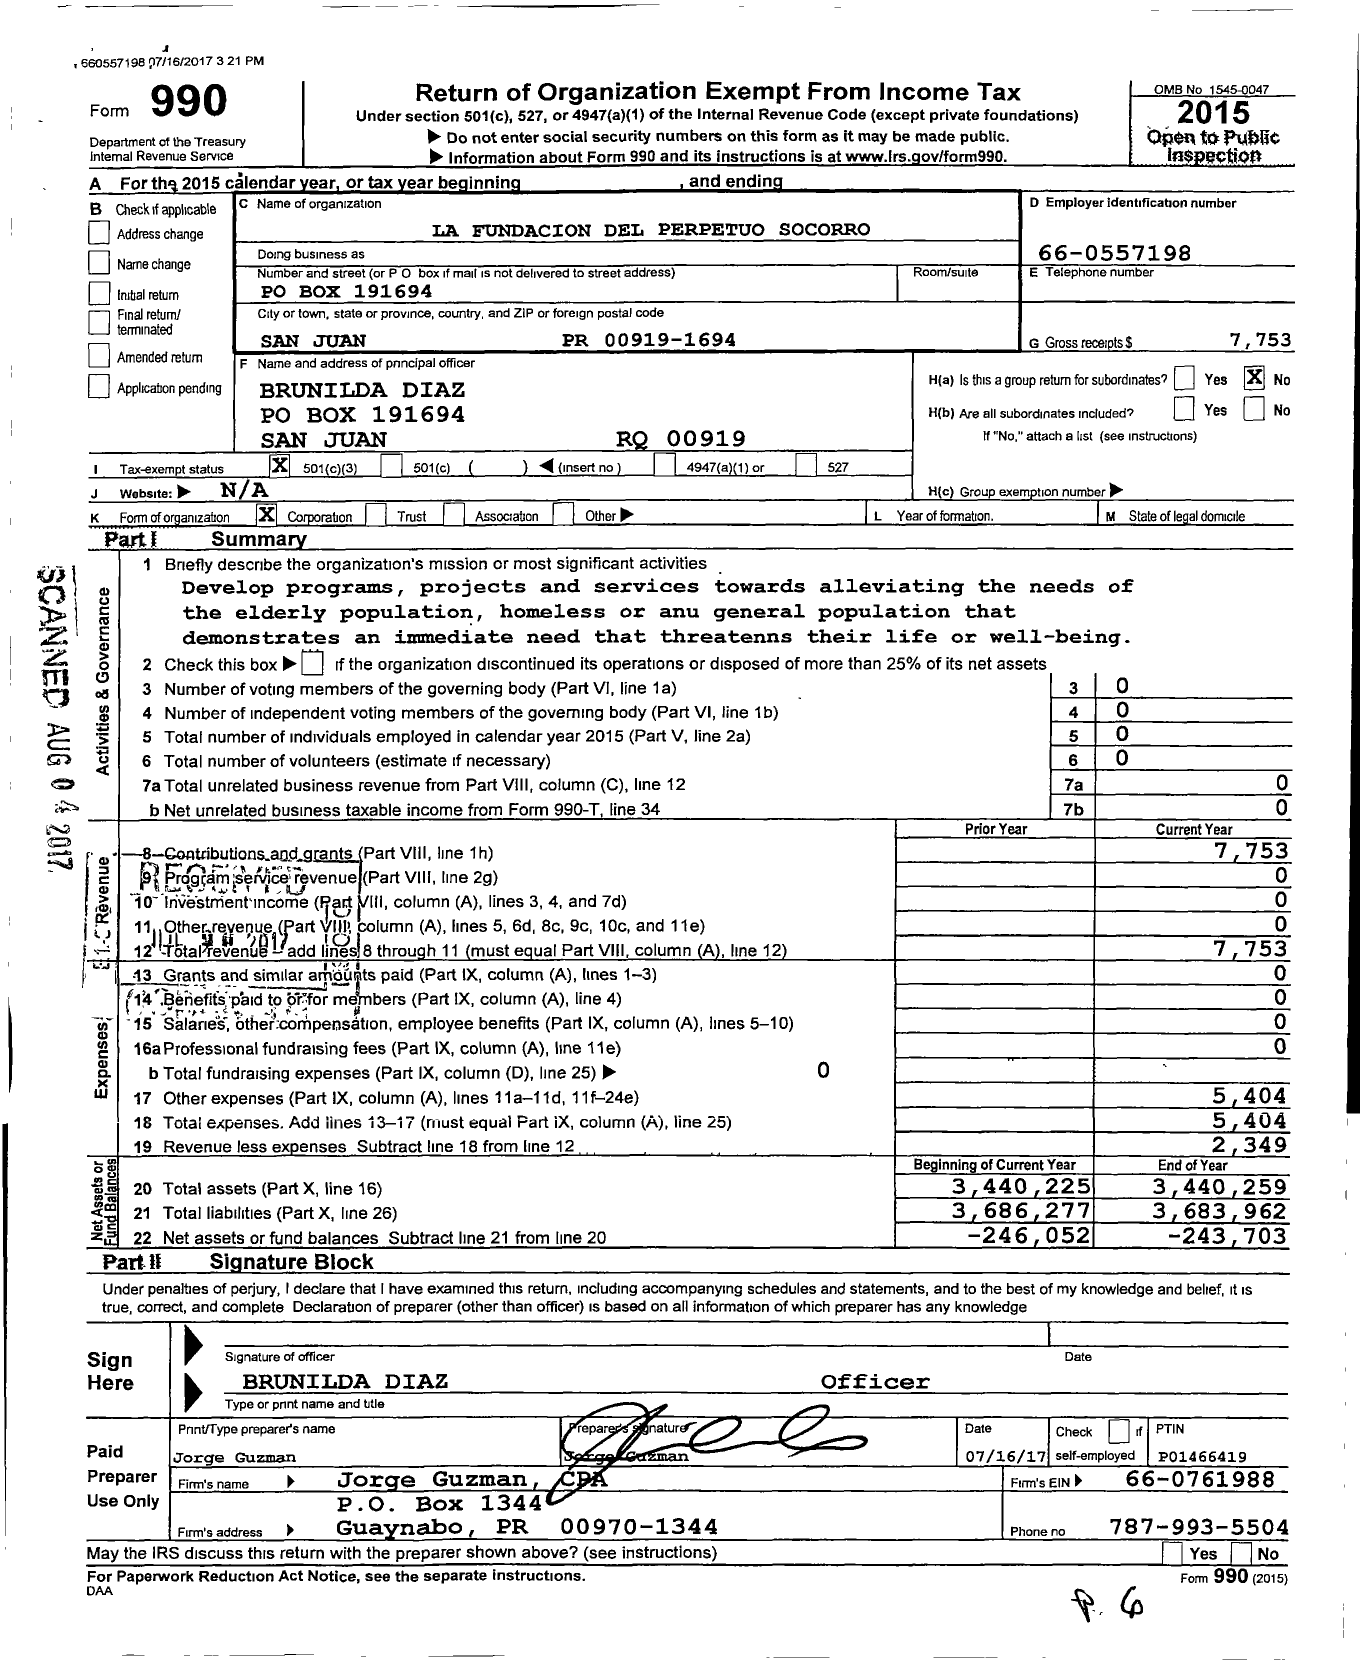 Image of first page of 2015 Form 990 for La Fundacion Del Perpetuo Socorro